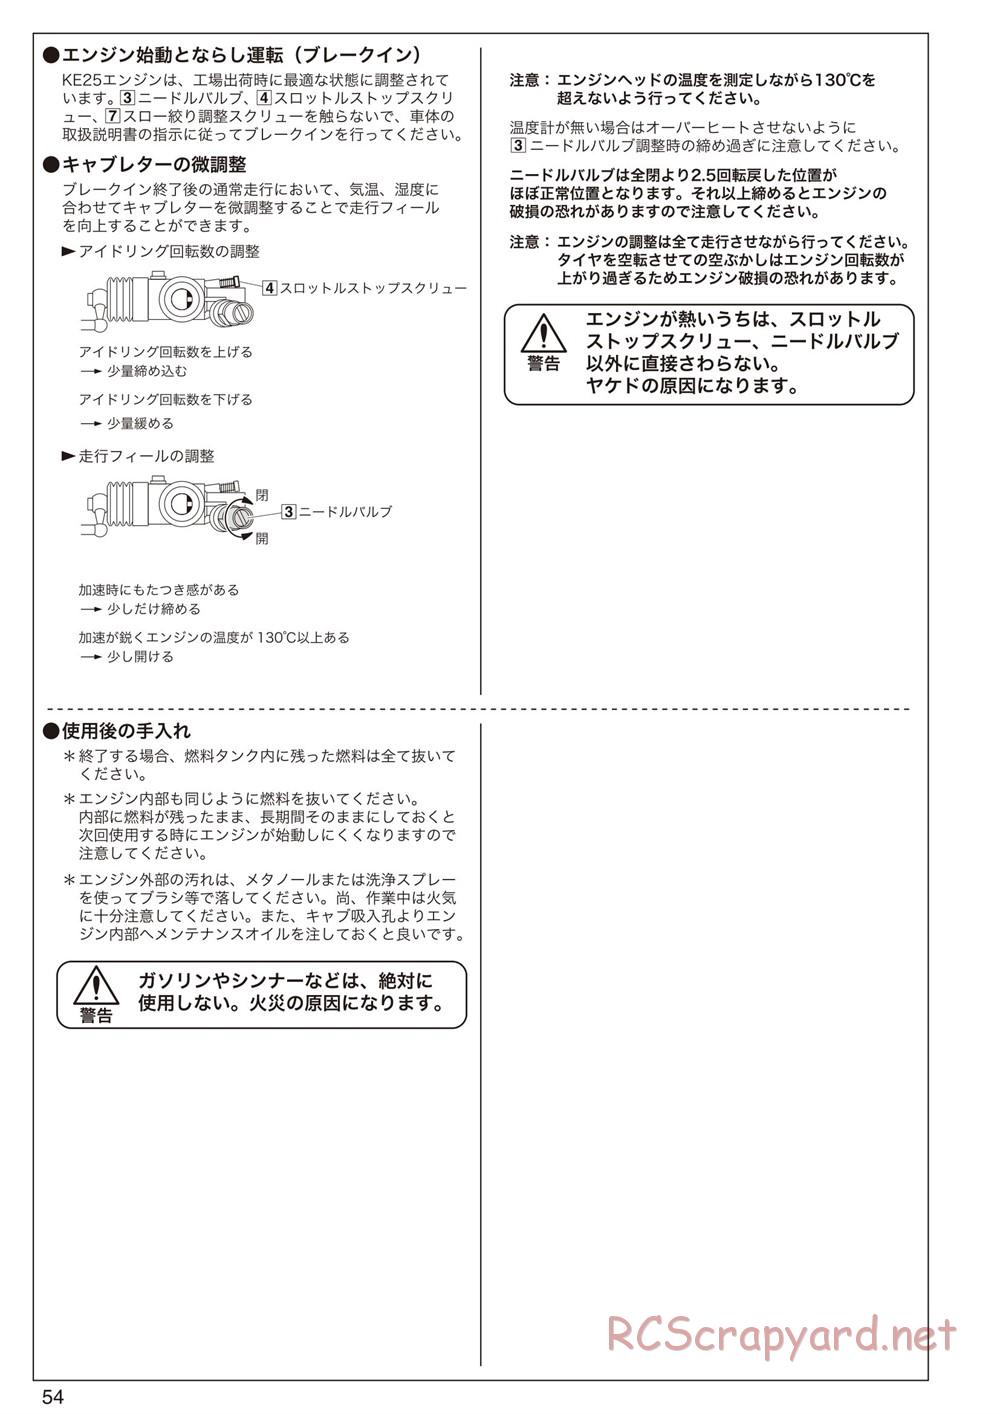 Kyosho - Inferno NEO ST Race Spec - Manual - Page 54